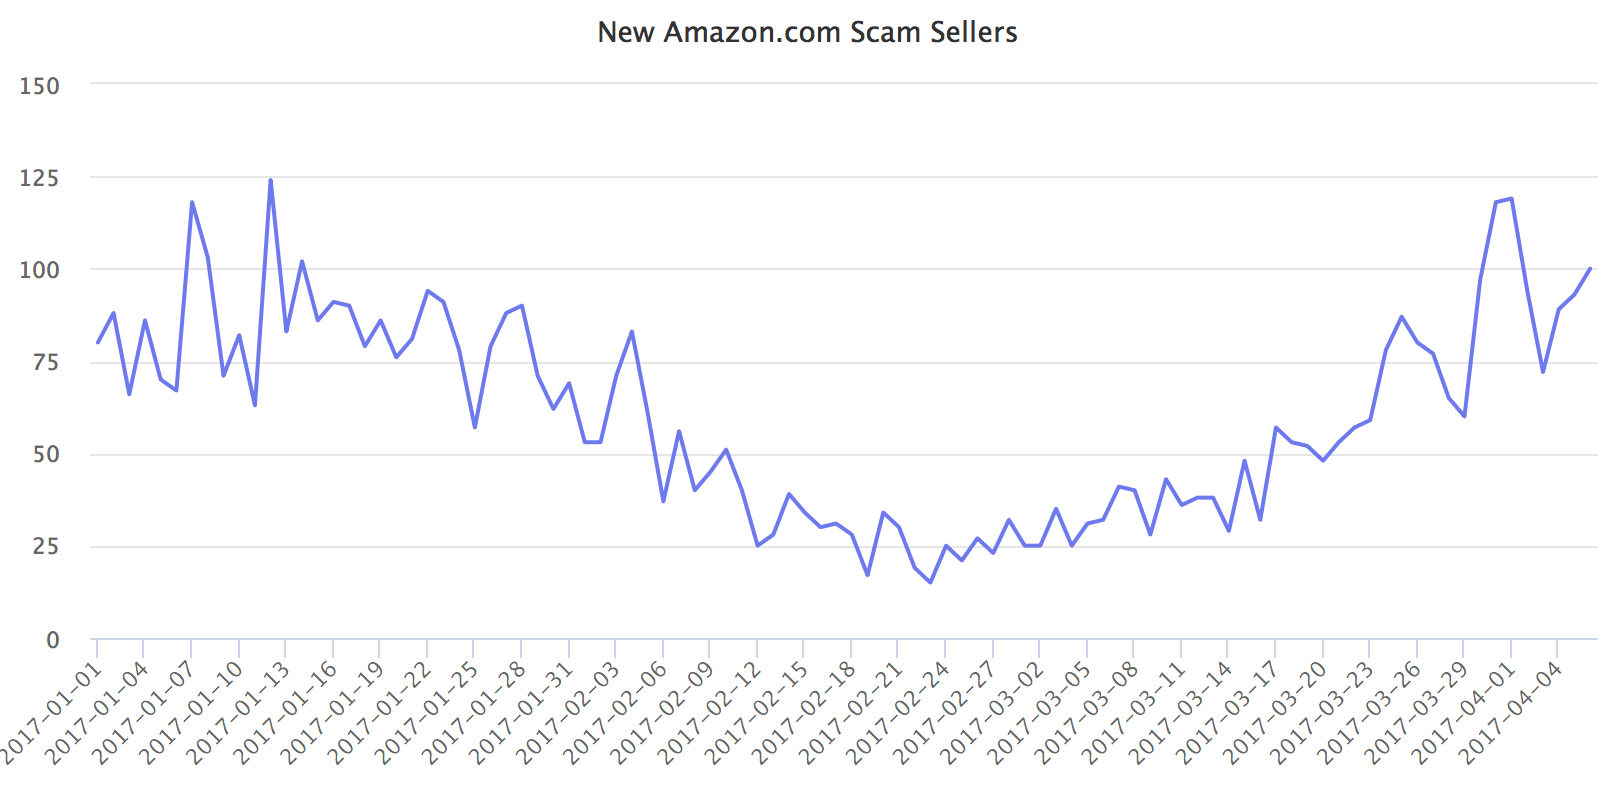 Amazon.com new scam sellers